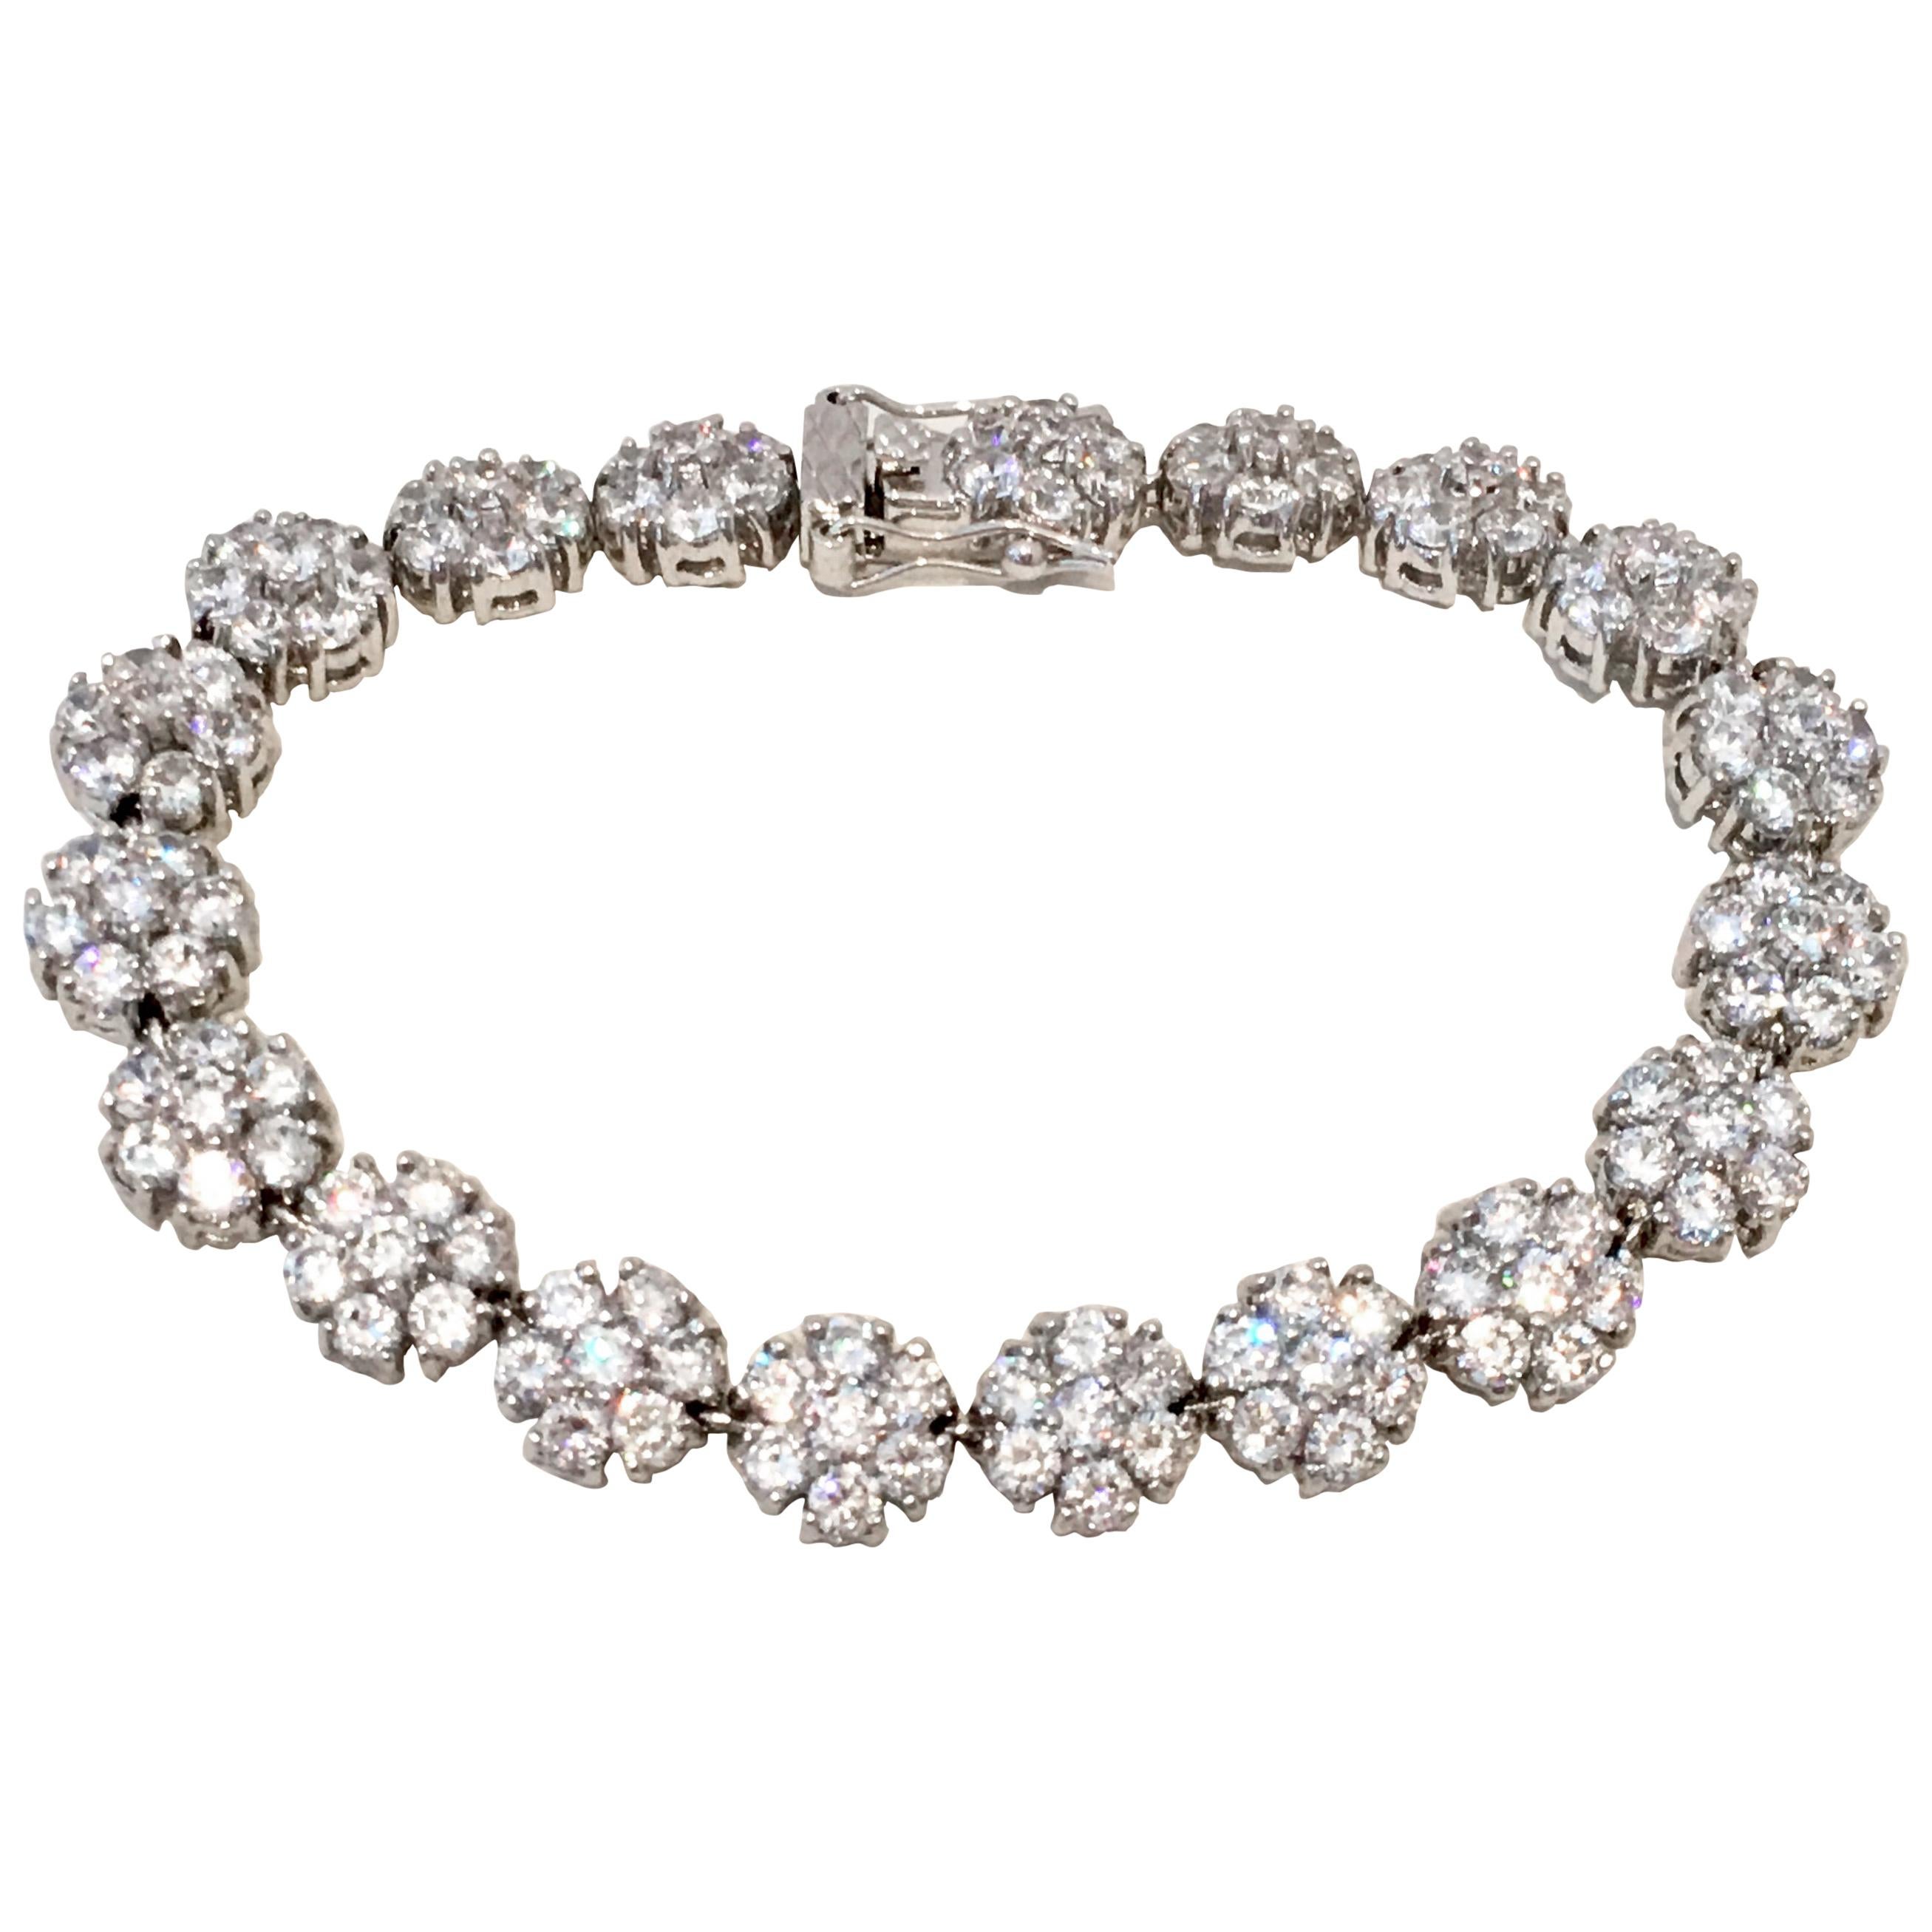 21st Century Silver Plate & Swarovski Crystal "Flower" Link Tennis Bracelet For Sale